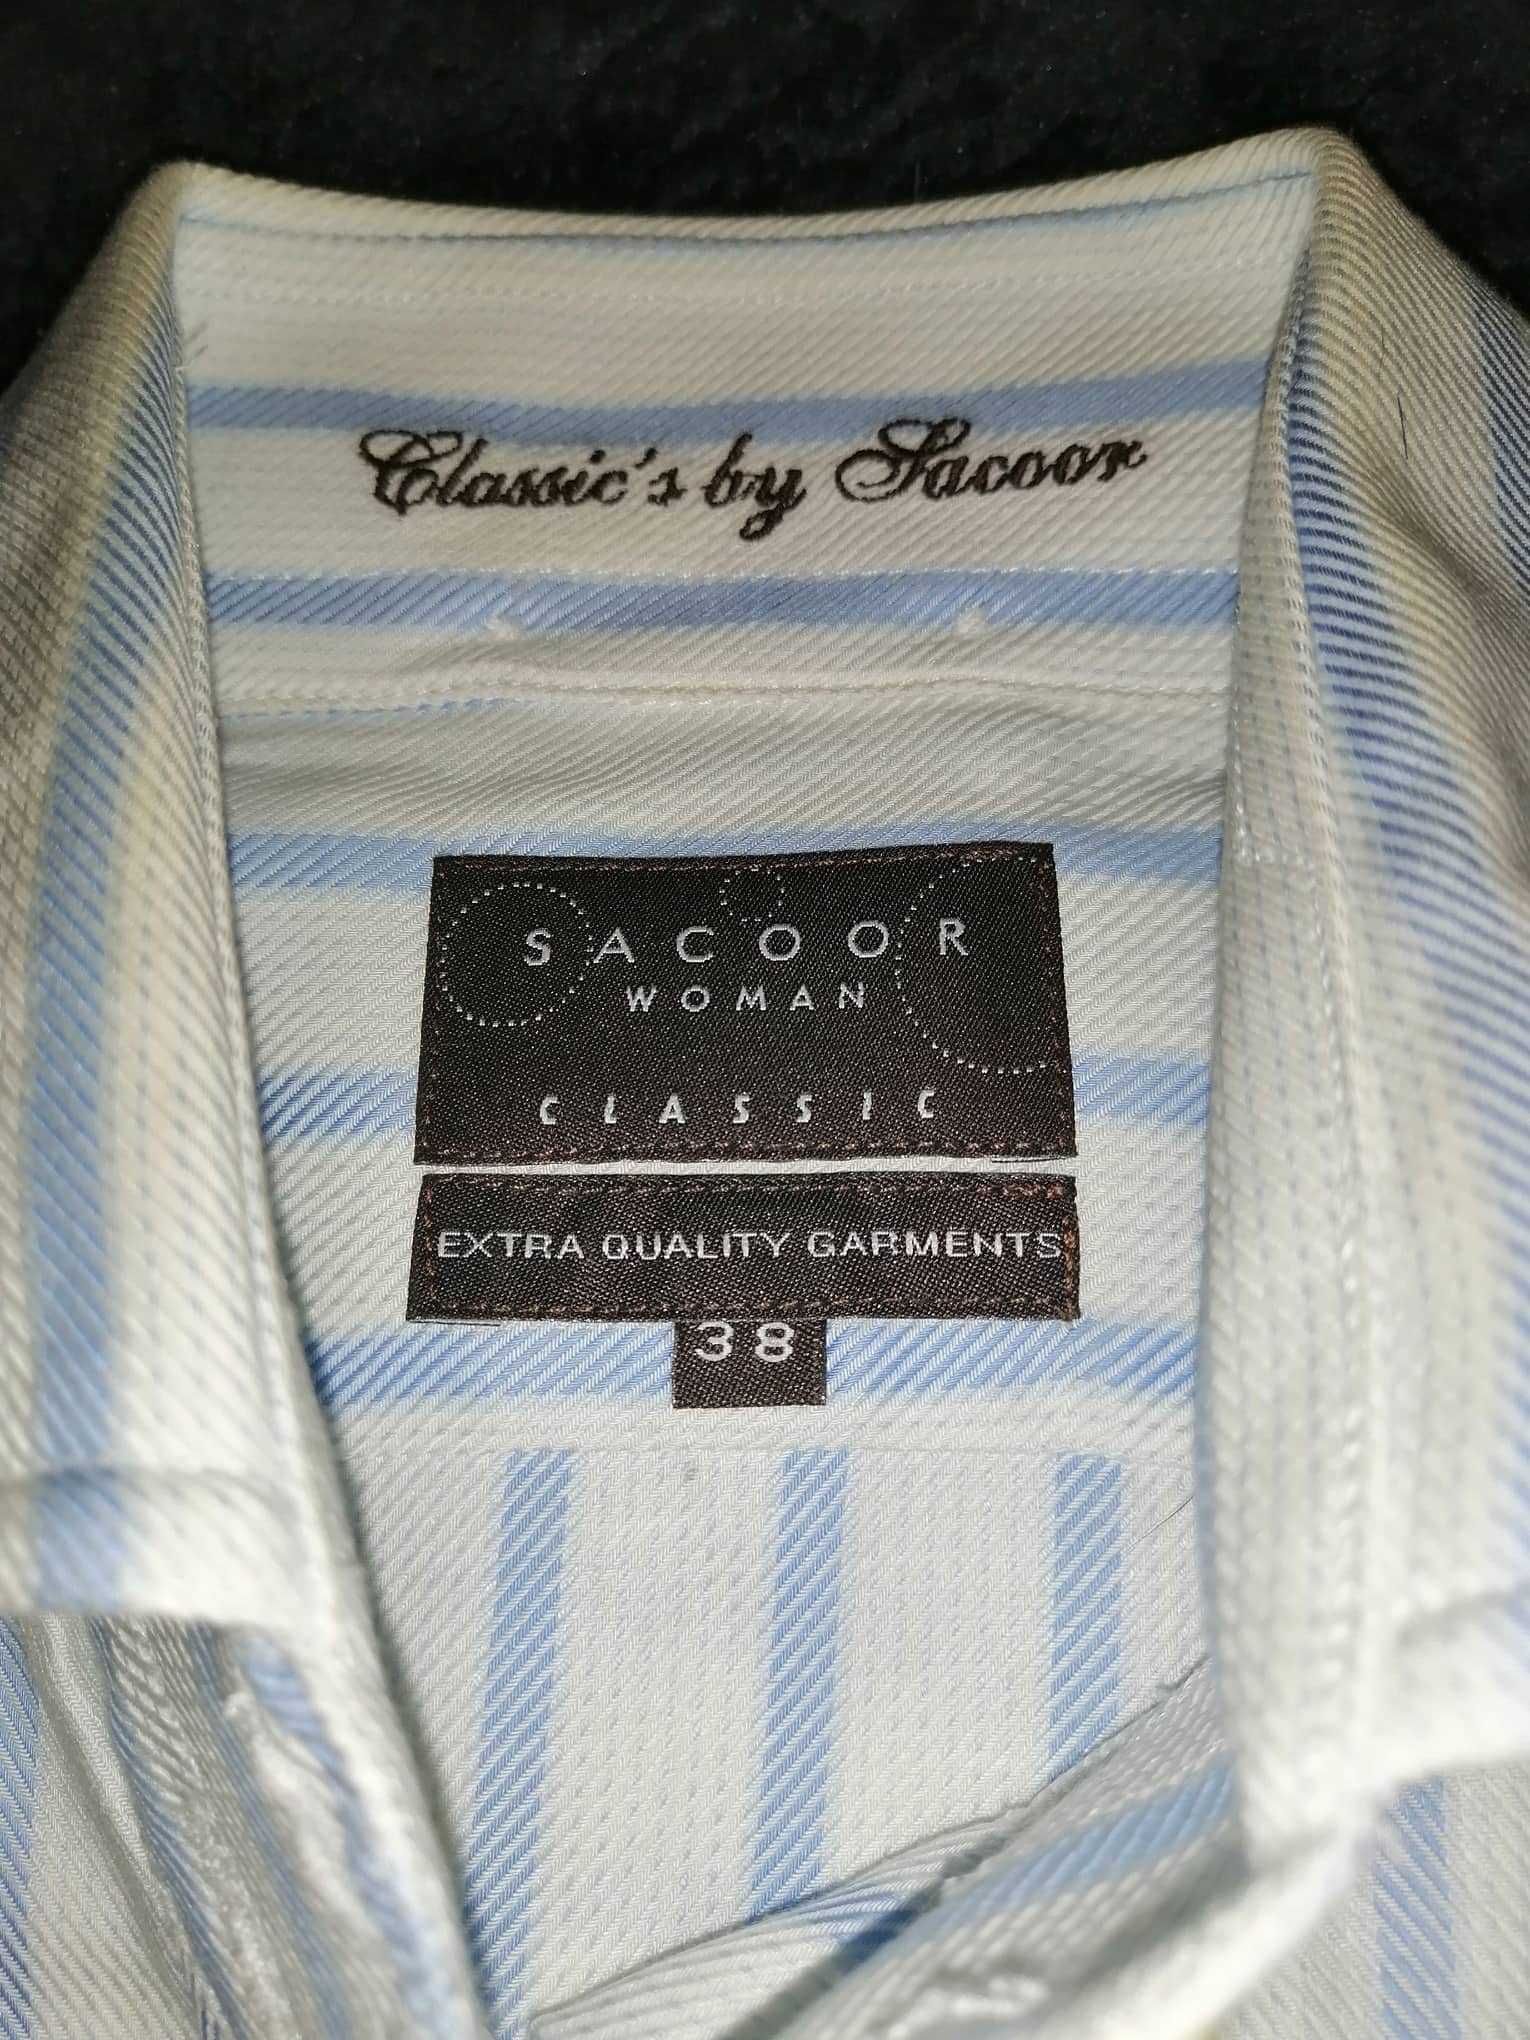 Camisa clássica branca risca azul Tam. 38 Sacoor - excelente estado